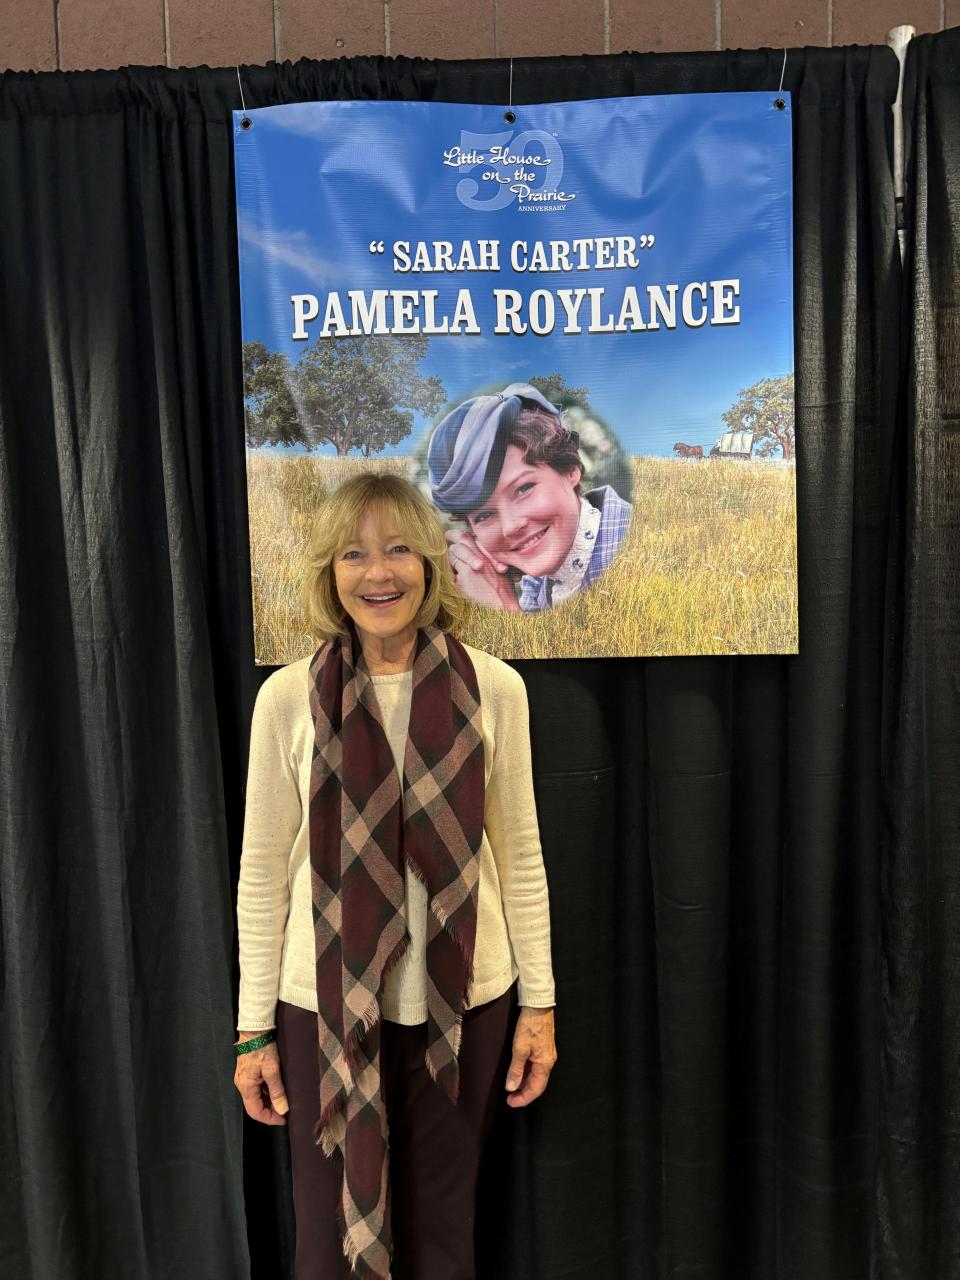 Pamela Roylance played Sarah Carter on "Little House on the Prairie."